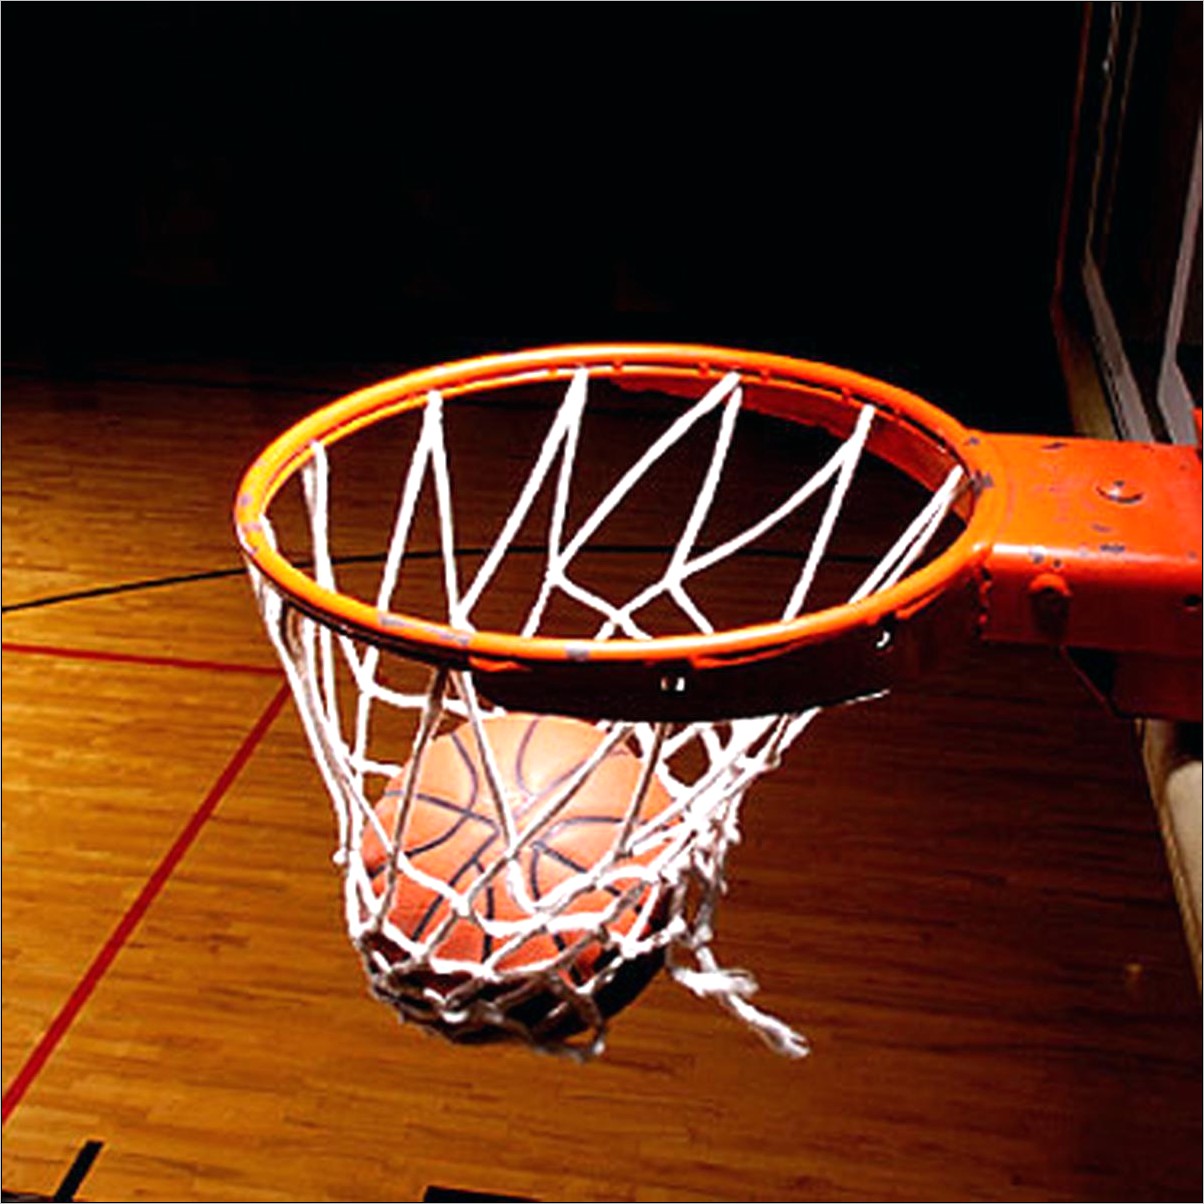 Contoh Surat Permohonan Aktif Kembali Kegiatan Basket